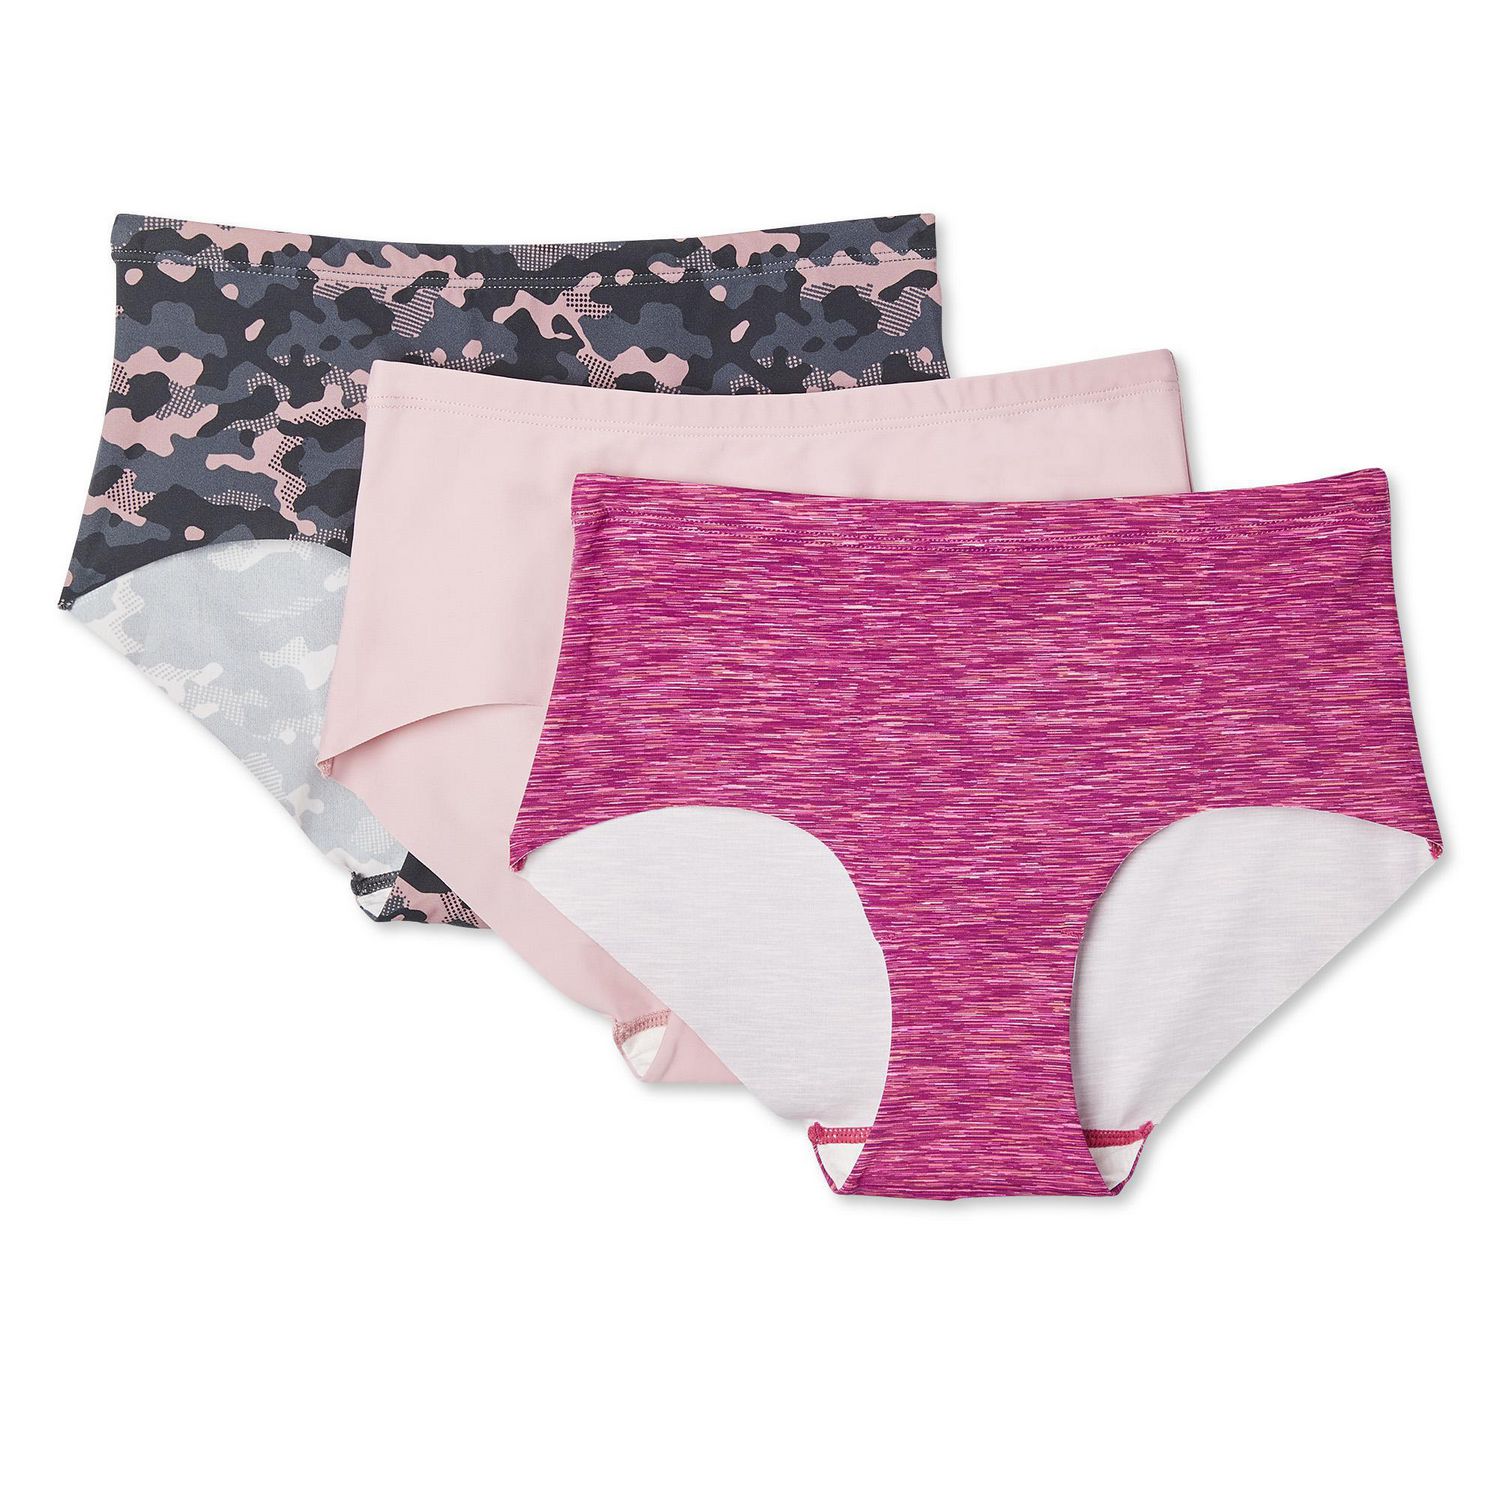 Hiworld Women's Pink Underwear Ski Equipment Quick-Drying Wicking